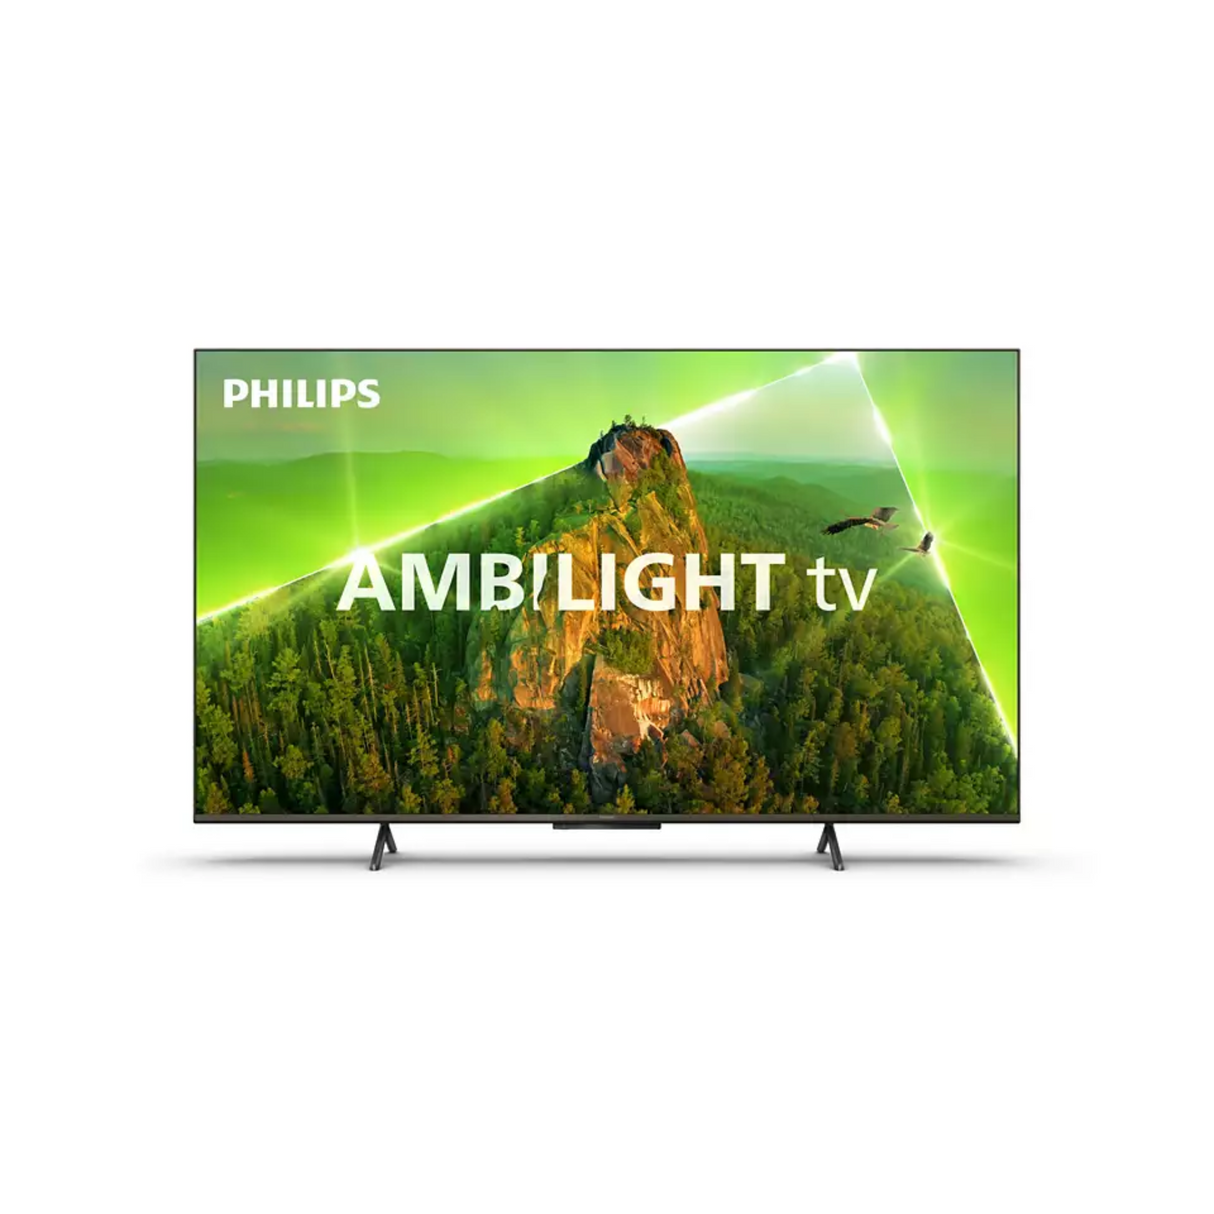 PHILIPS Ambilight 65PUS8108/12 65" Smart 4K Ultra HD HDR LED TV with Amazon Alexa